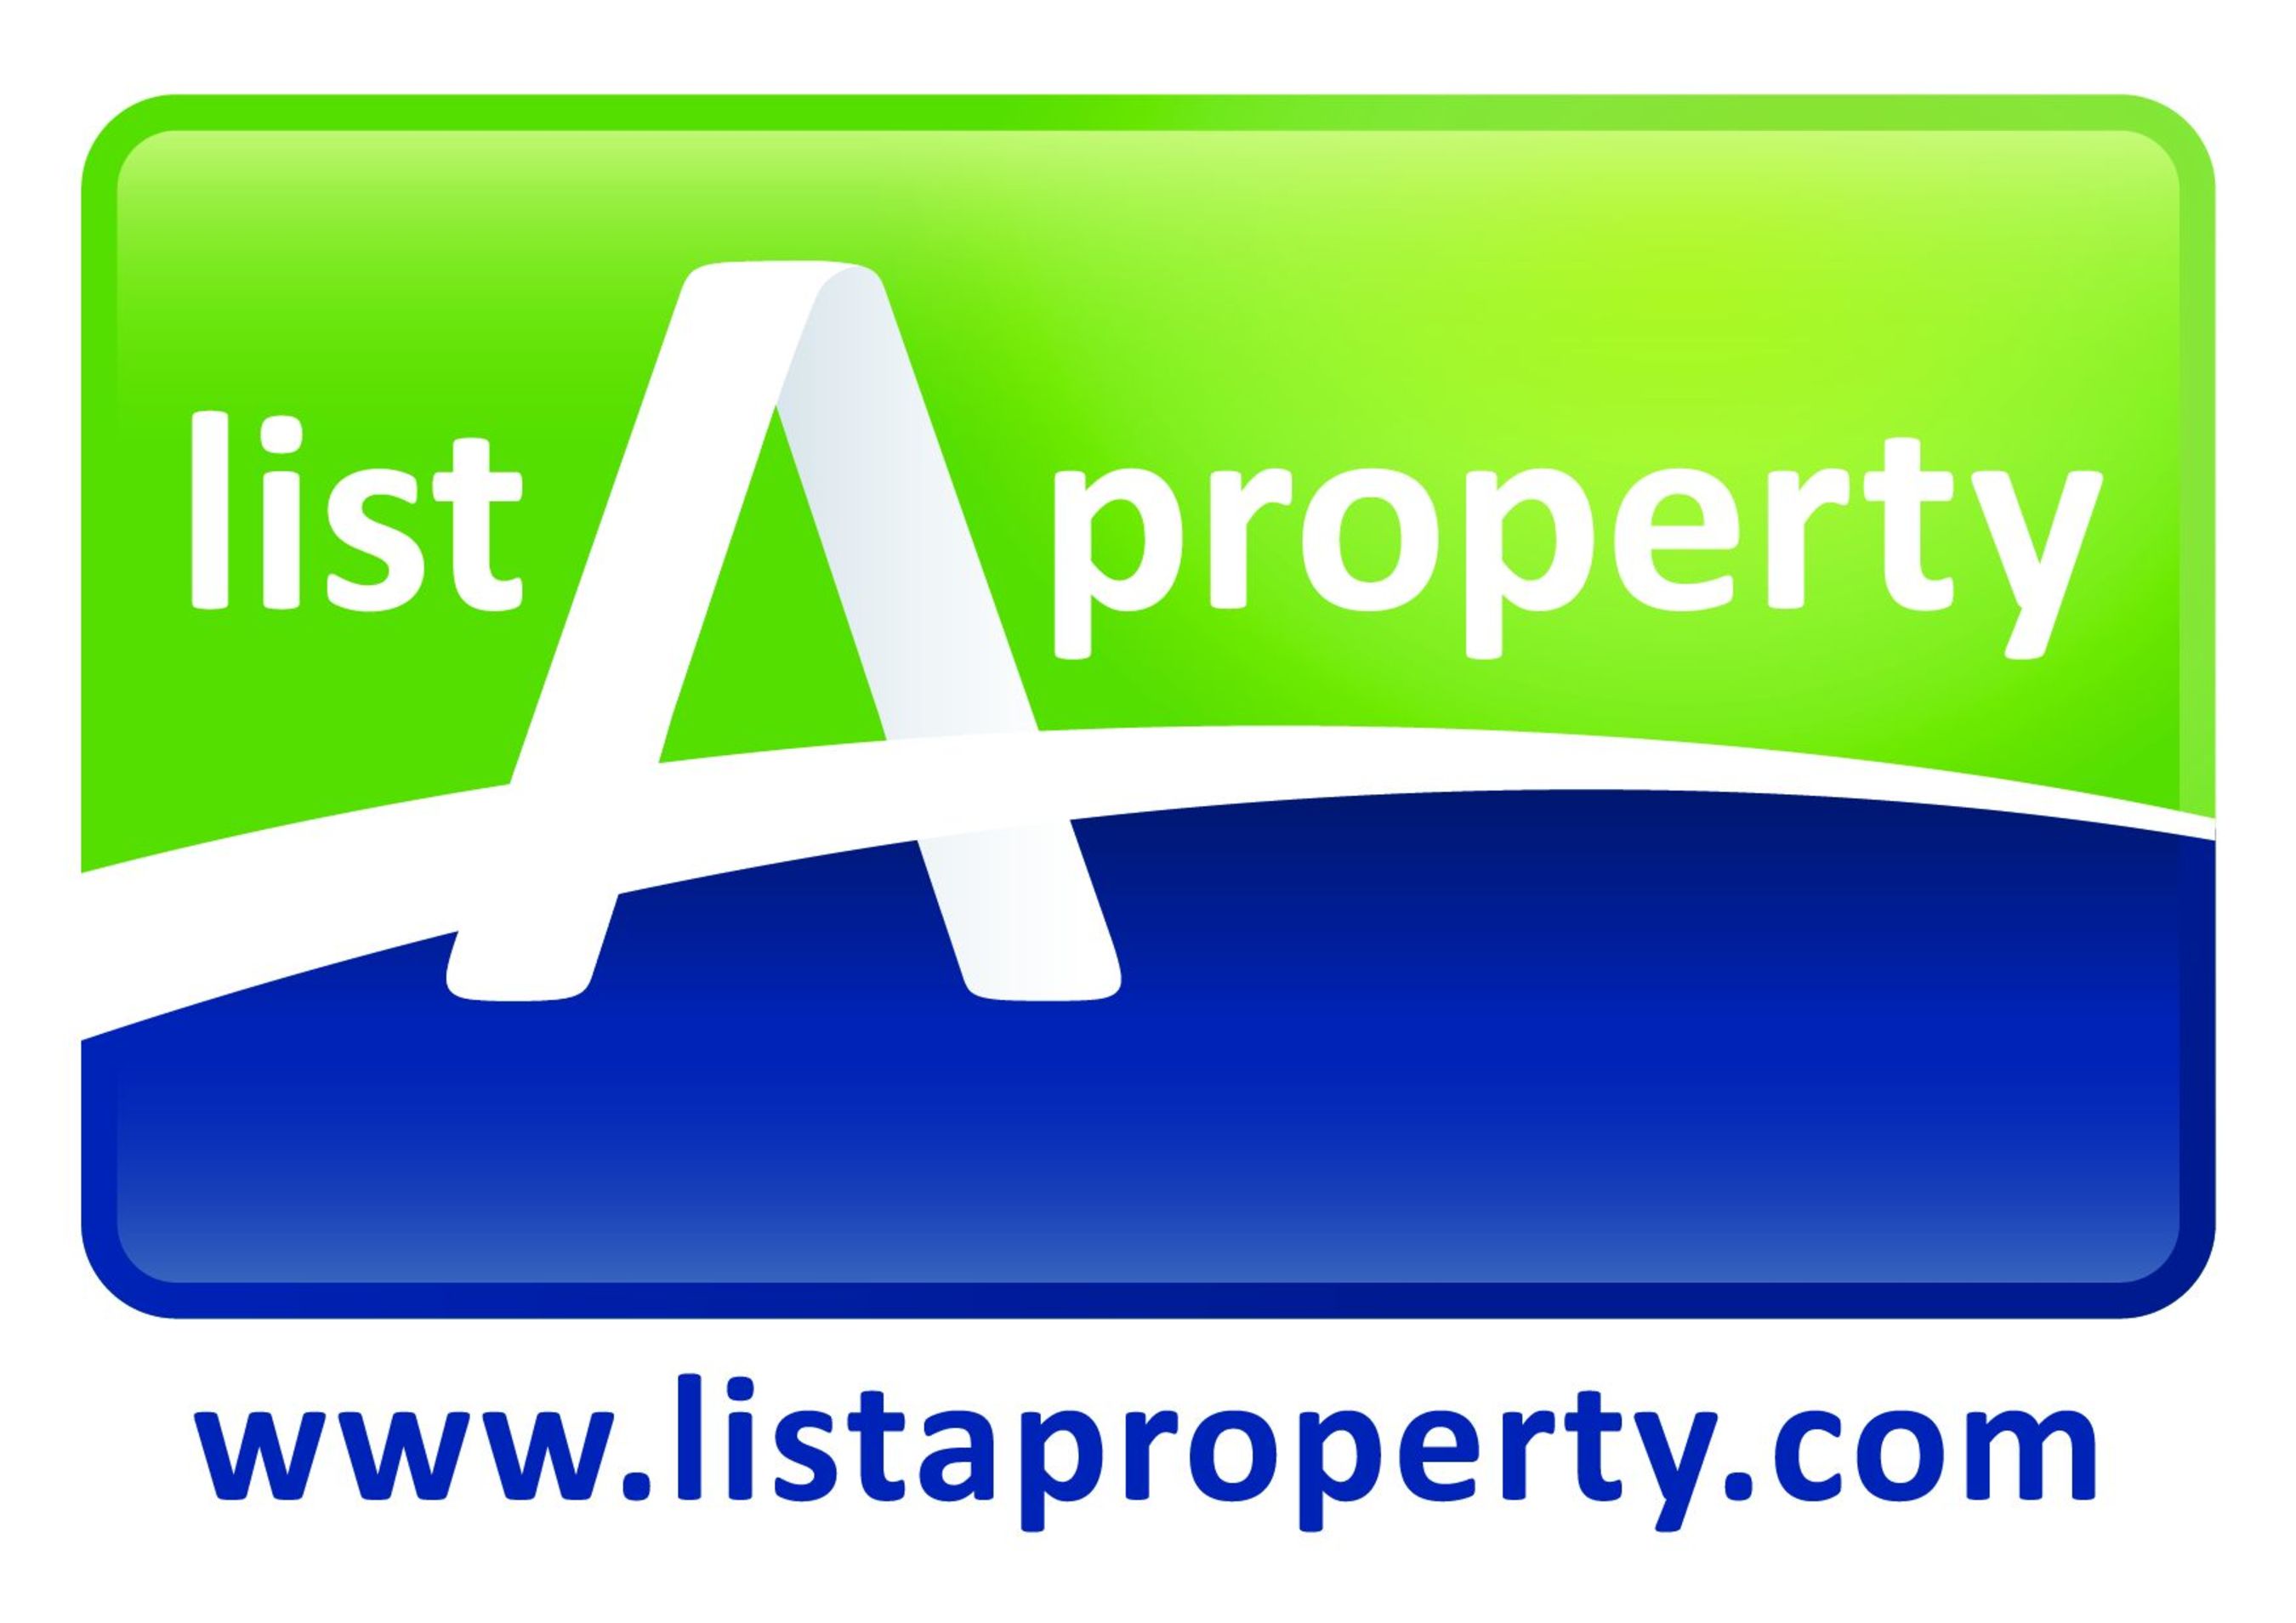 listaproperty logo (PRNewsFoto/listaproperty)